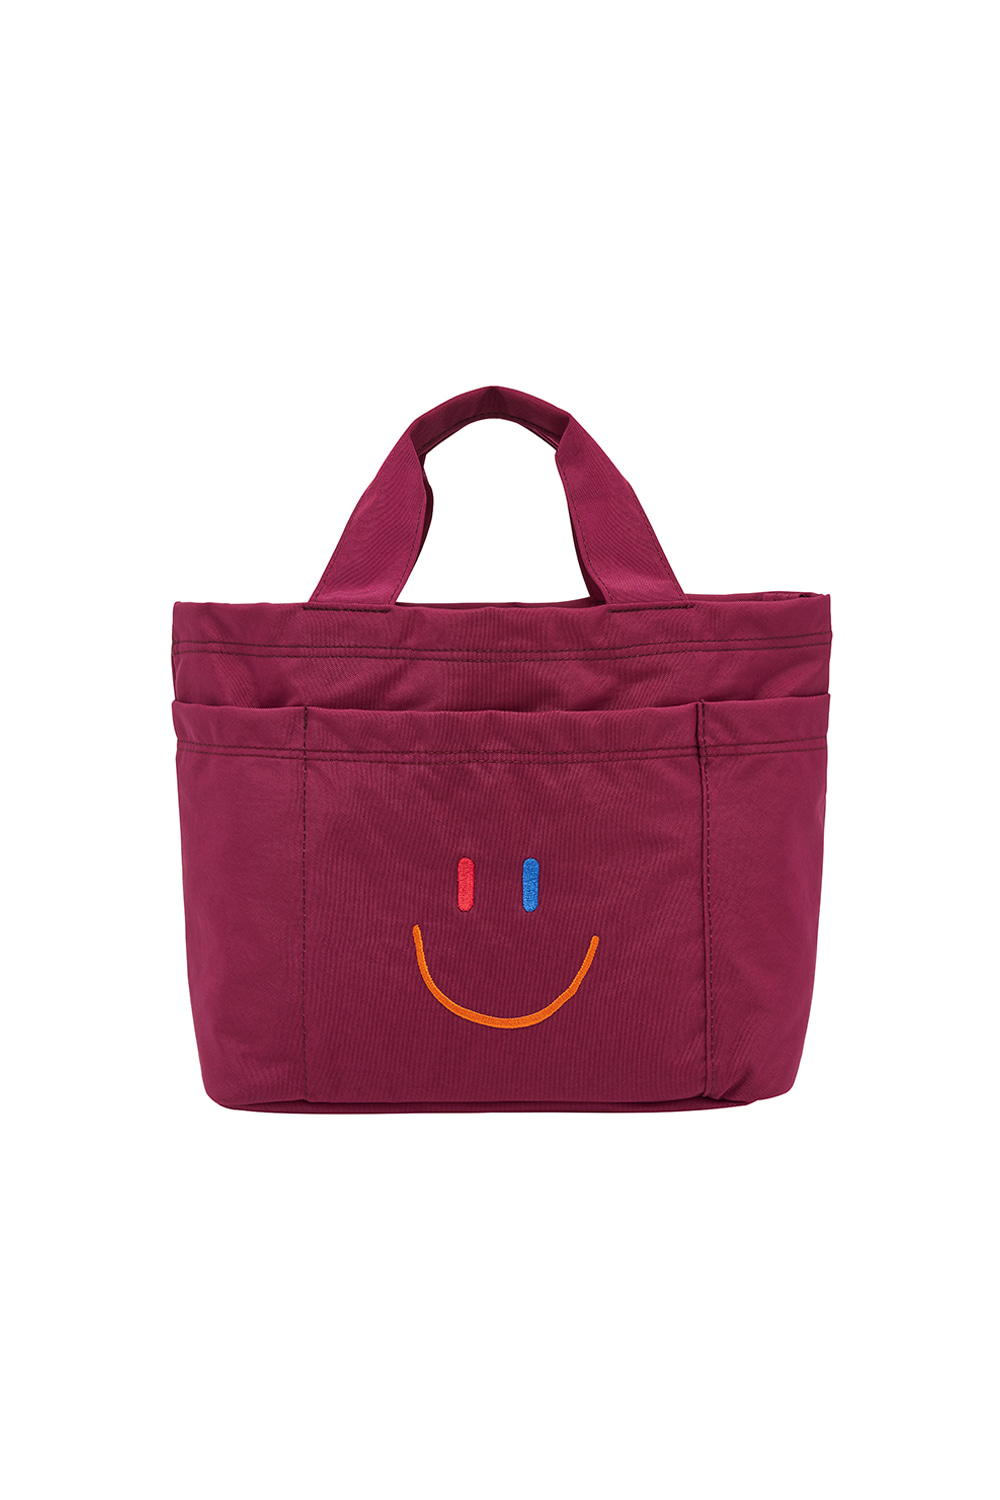 LaLa Cart Bag [Wine]